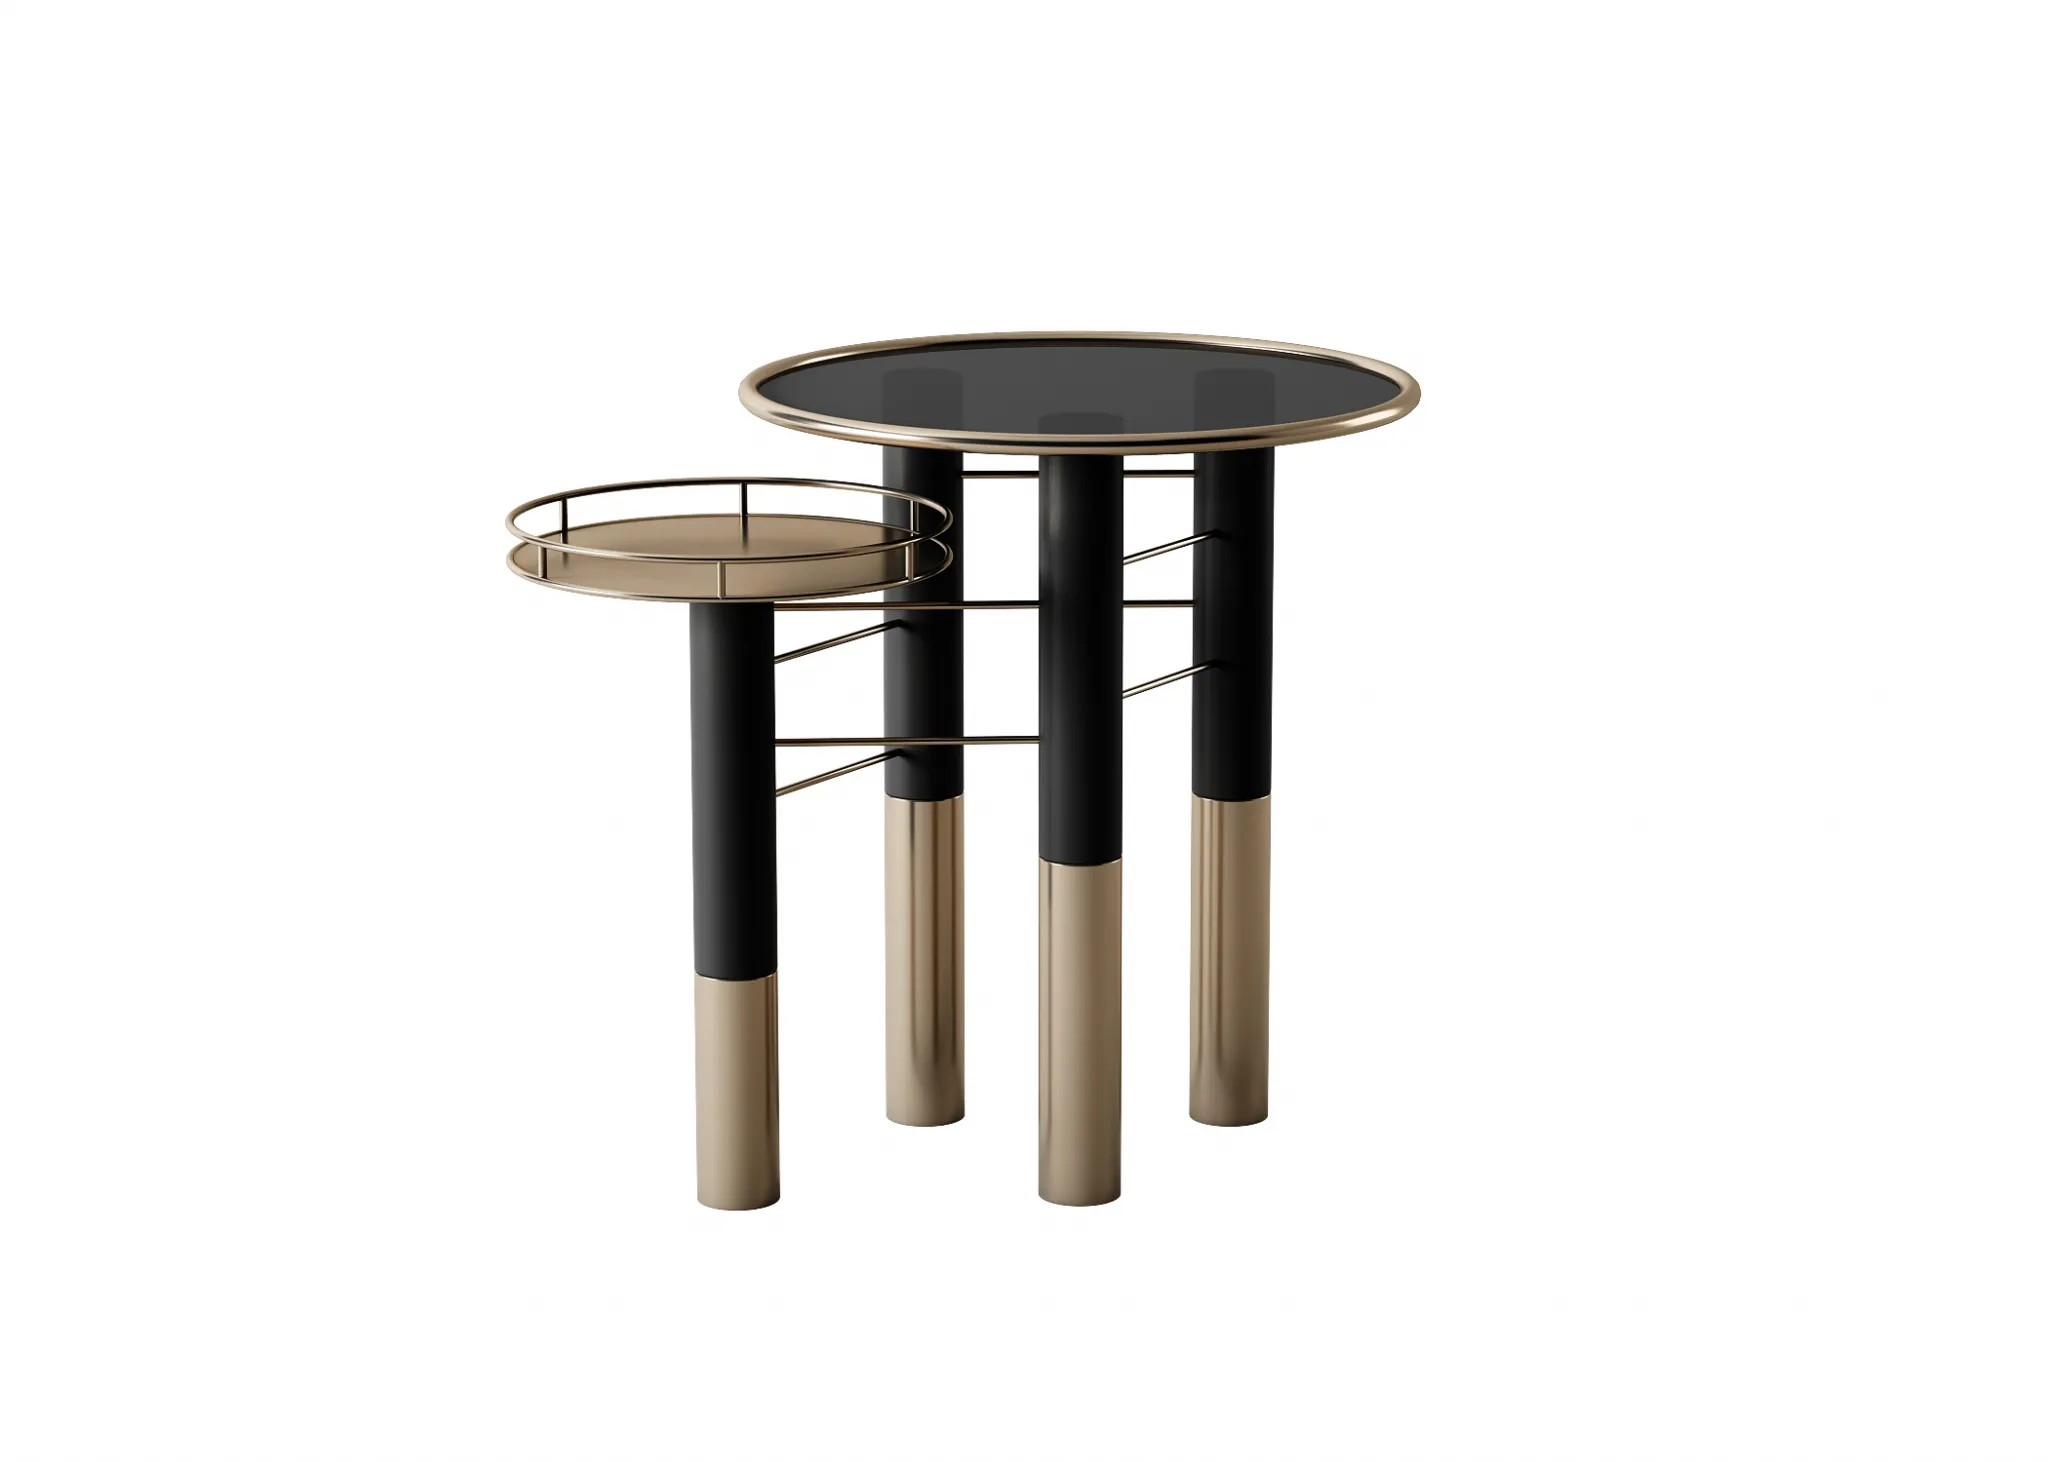 FURNITURE 3D MODELS – TABLES – 0325